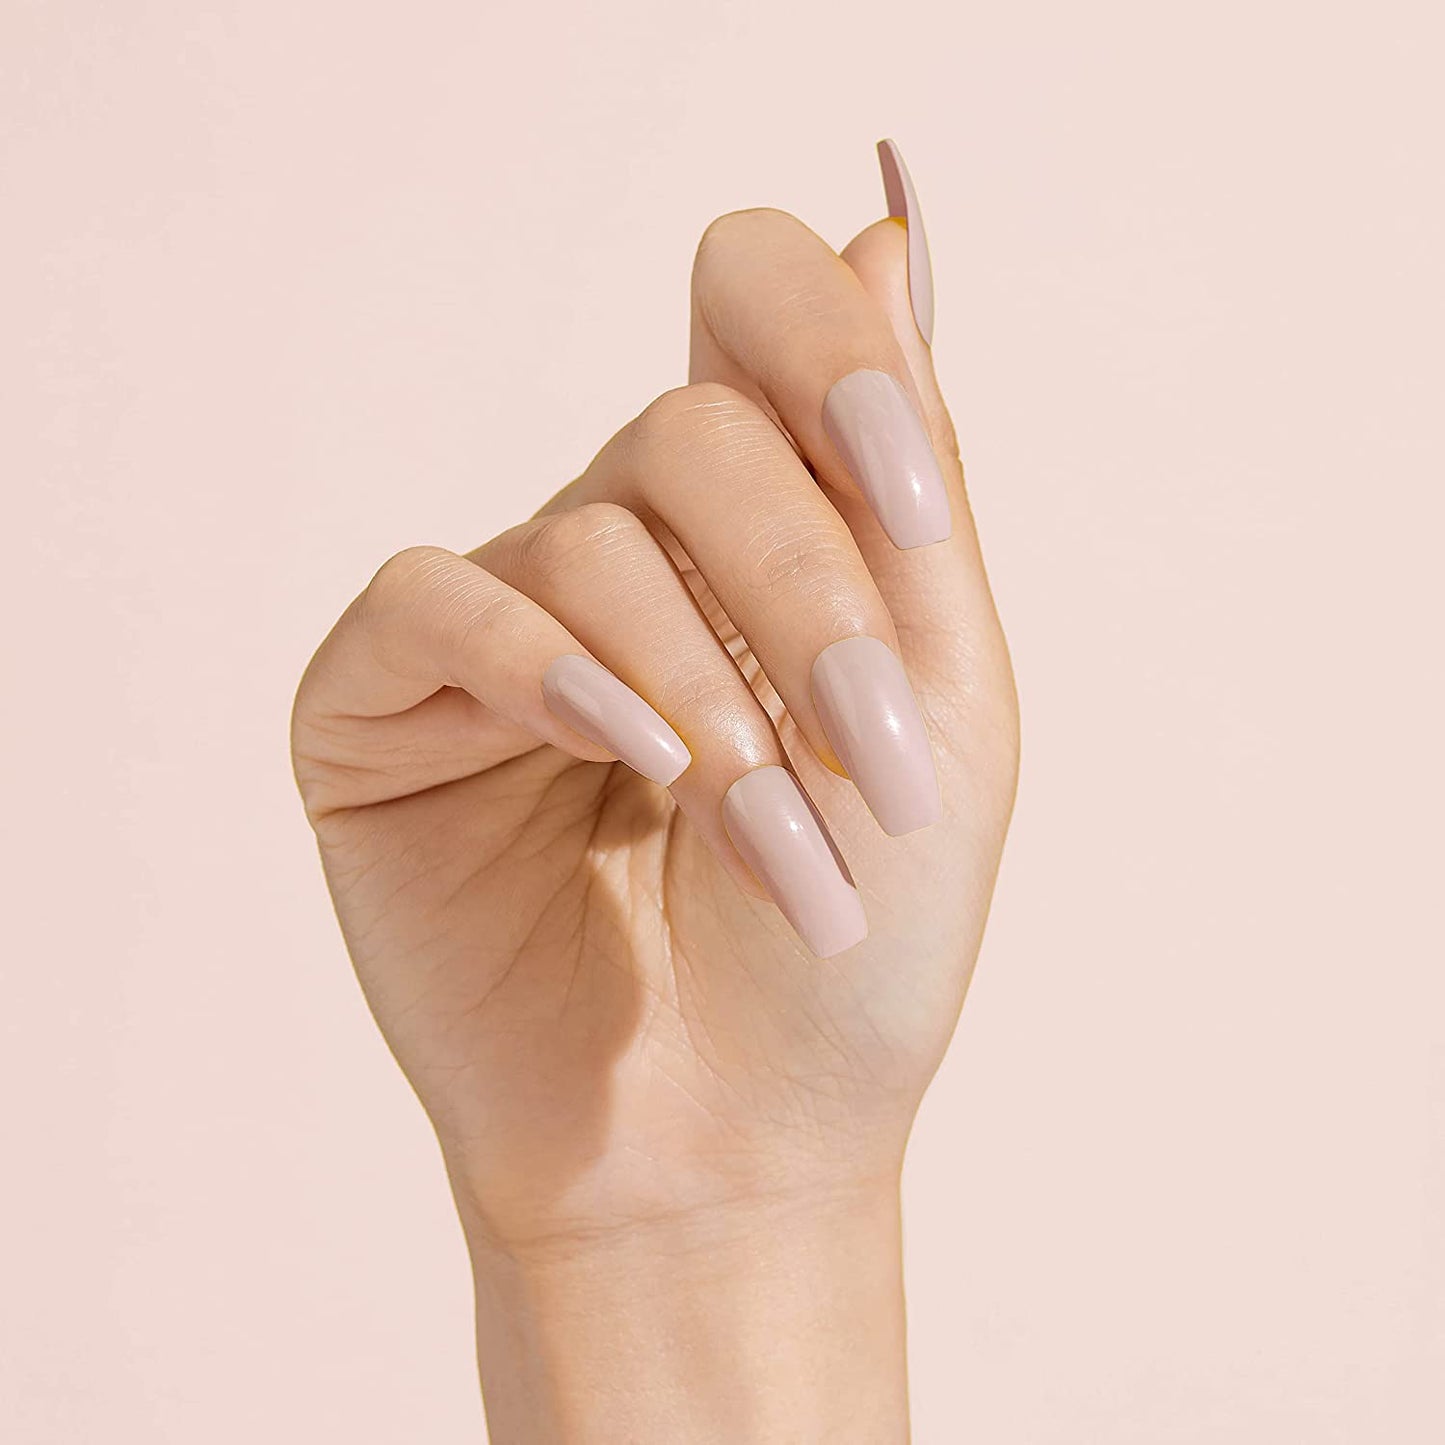 KISS GoldFinger Gel Glam Manicure Nails GC13